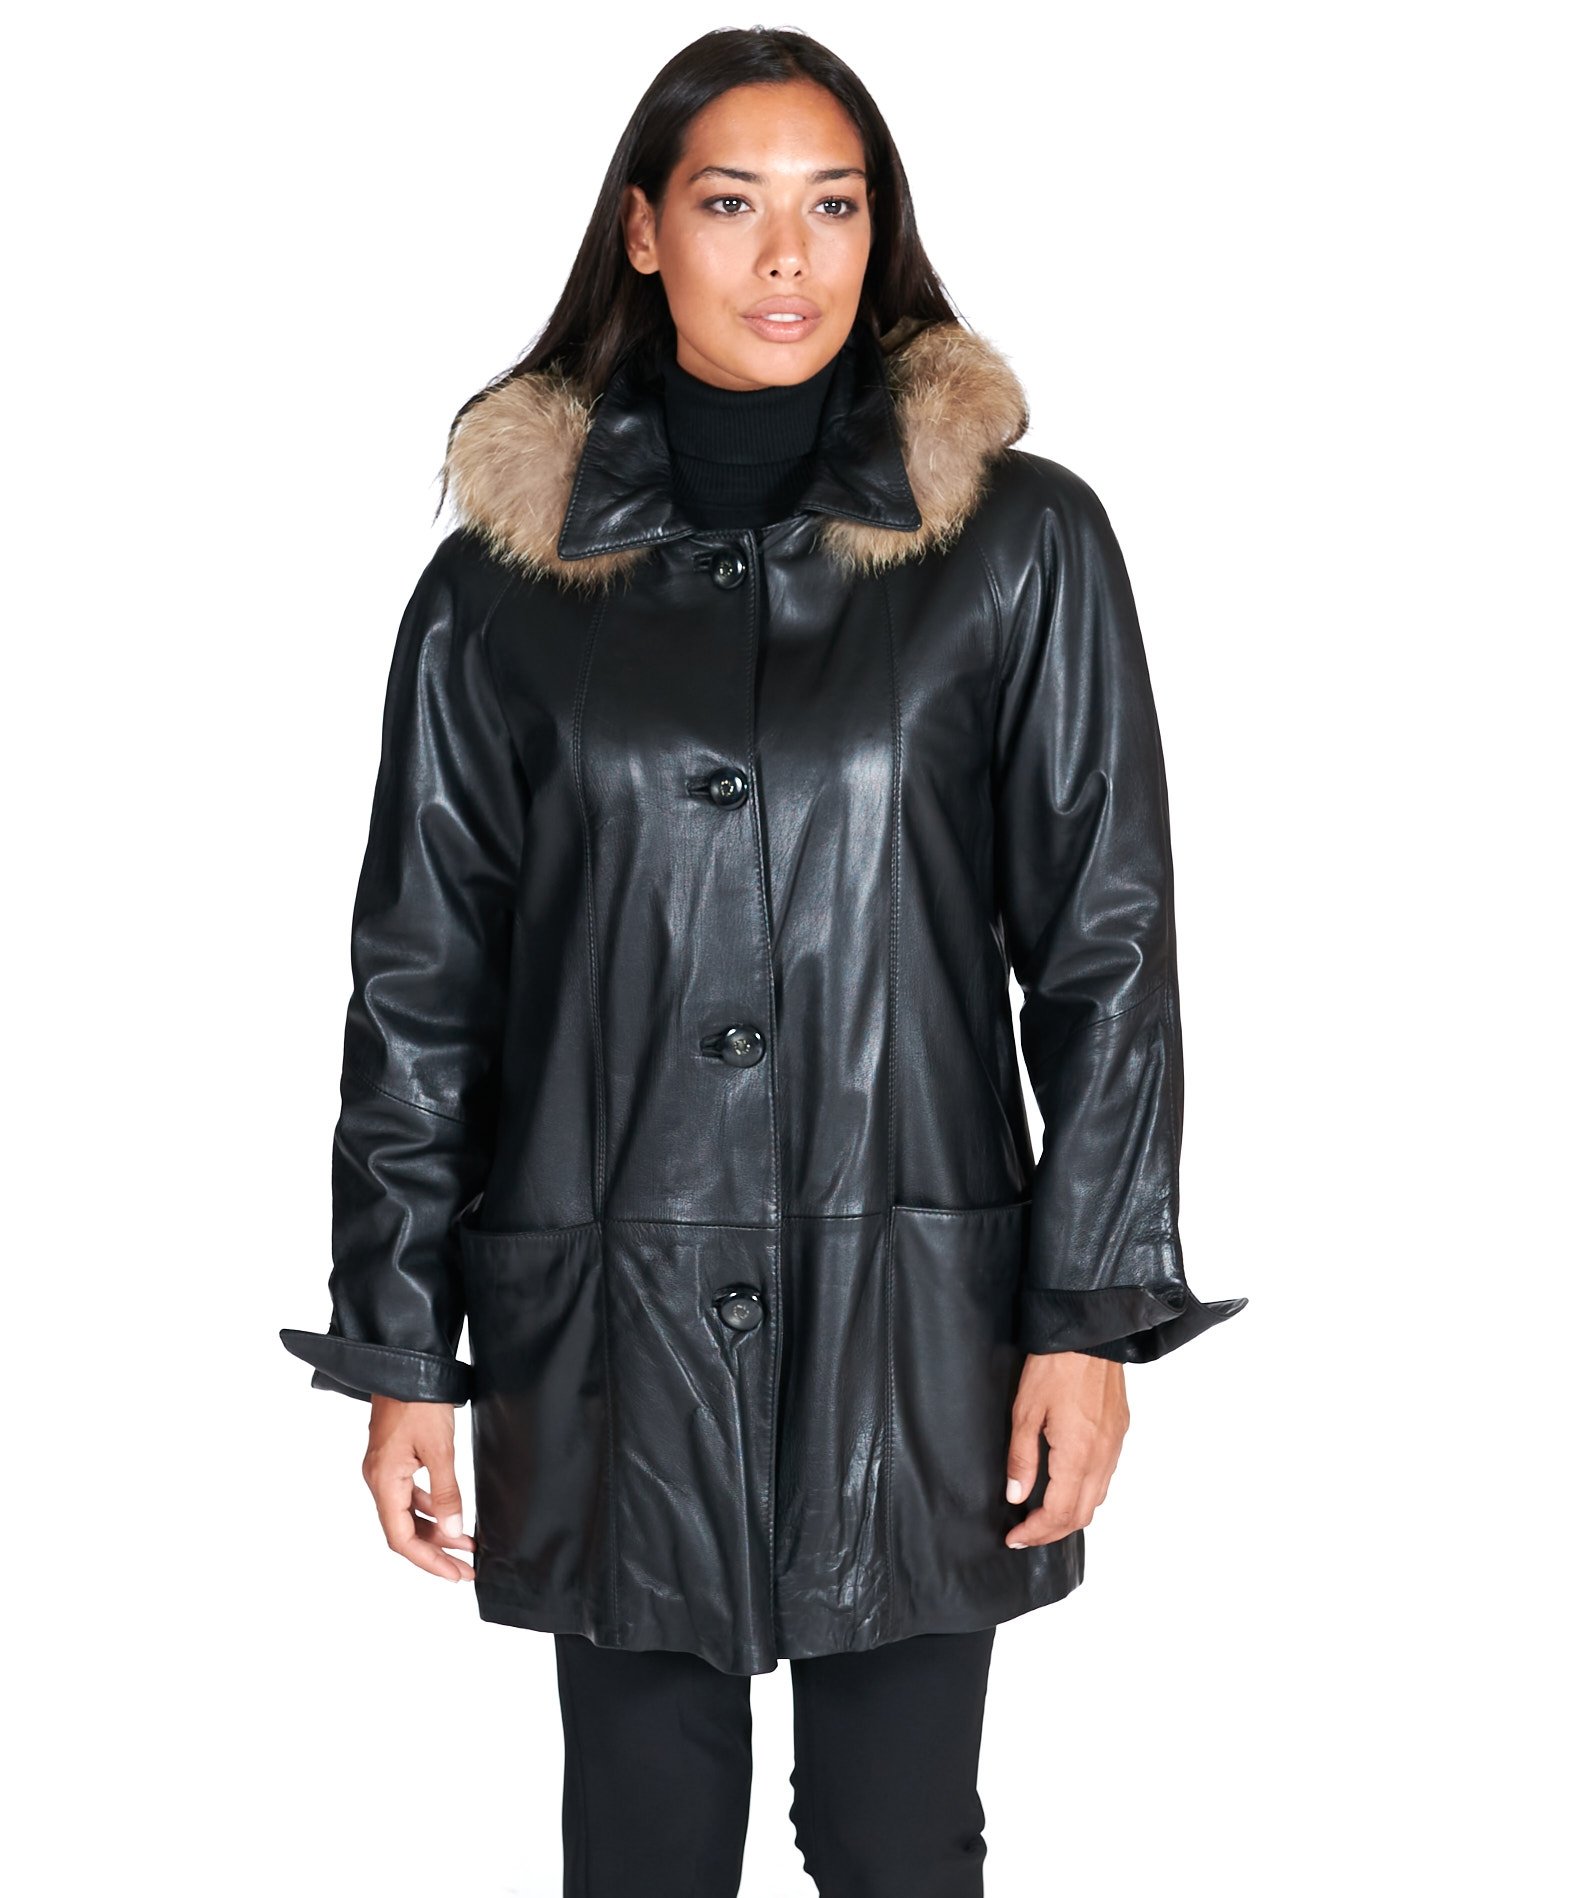 Women's Leather Coat hood with murmasky fur black colour Pamela